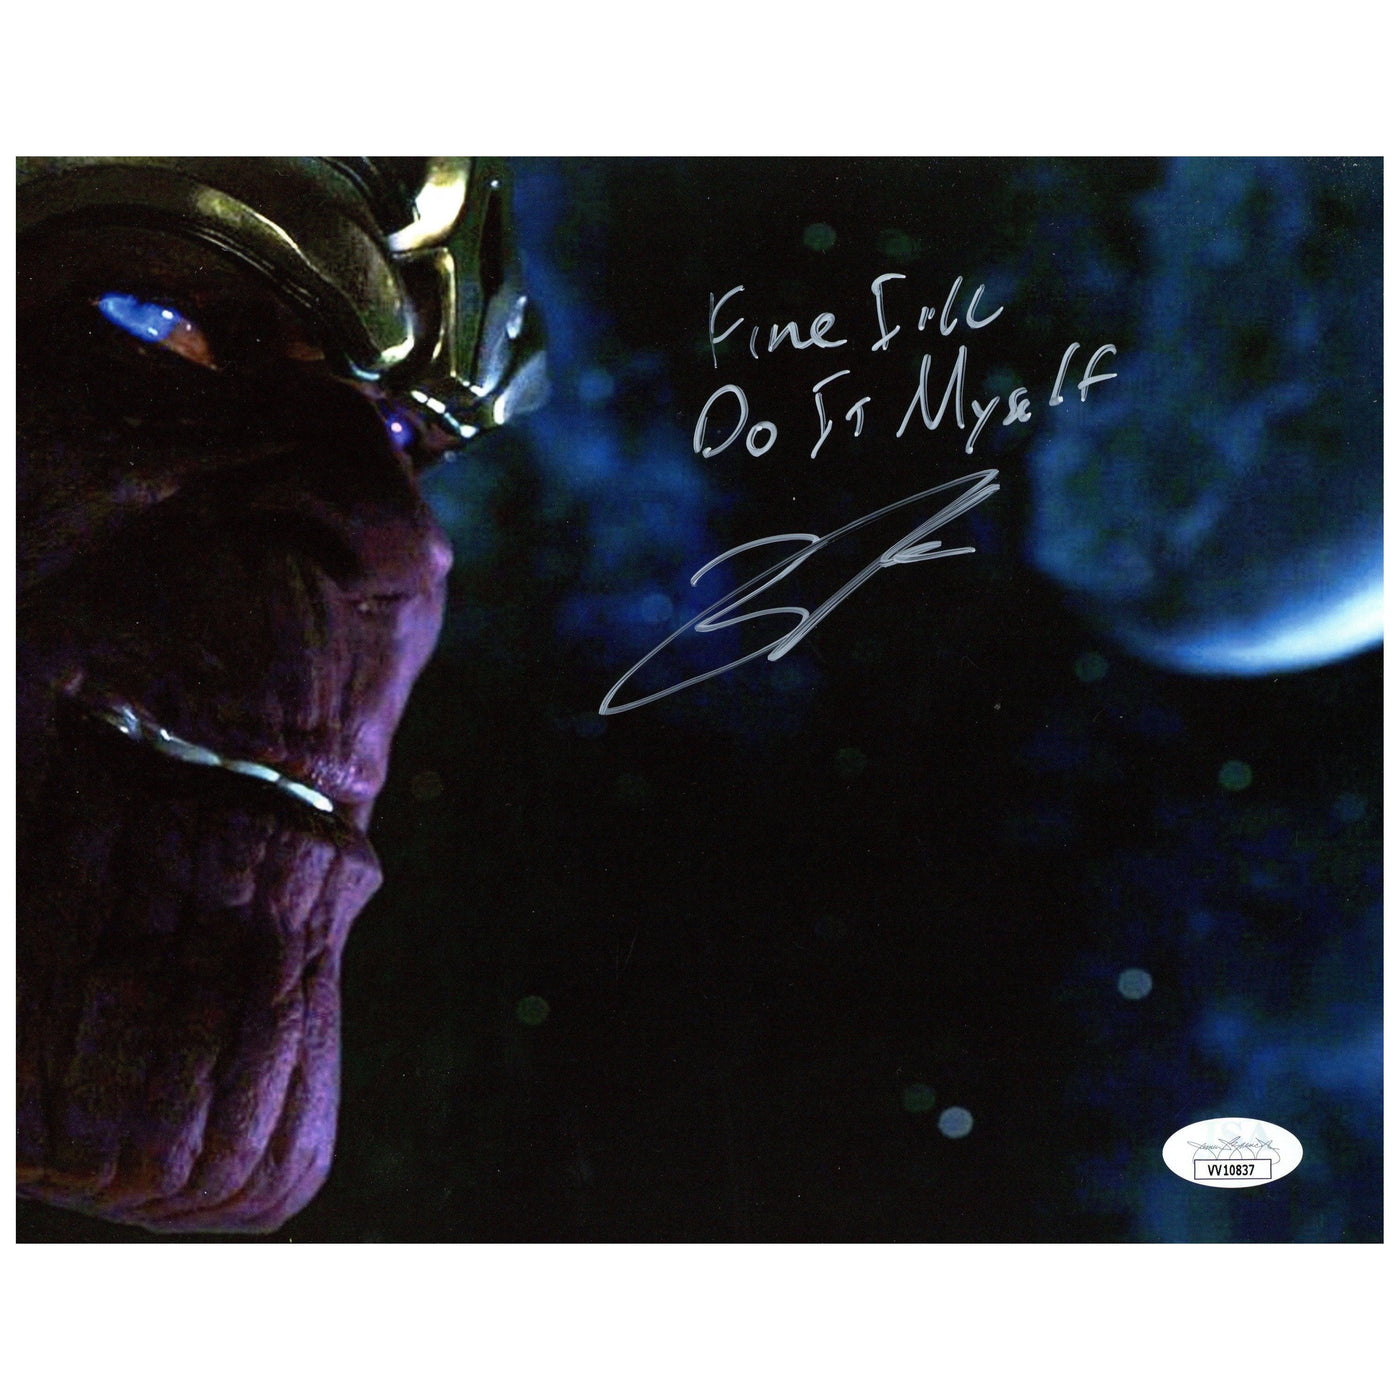 Damion Poitier Signed 8x10 Photo Marvel Thanos Autographed JSA COA